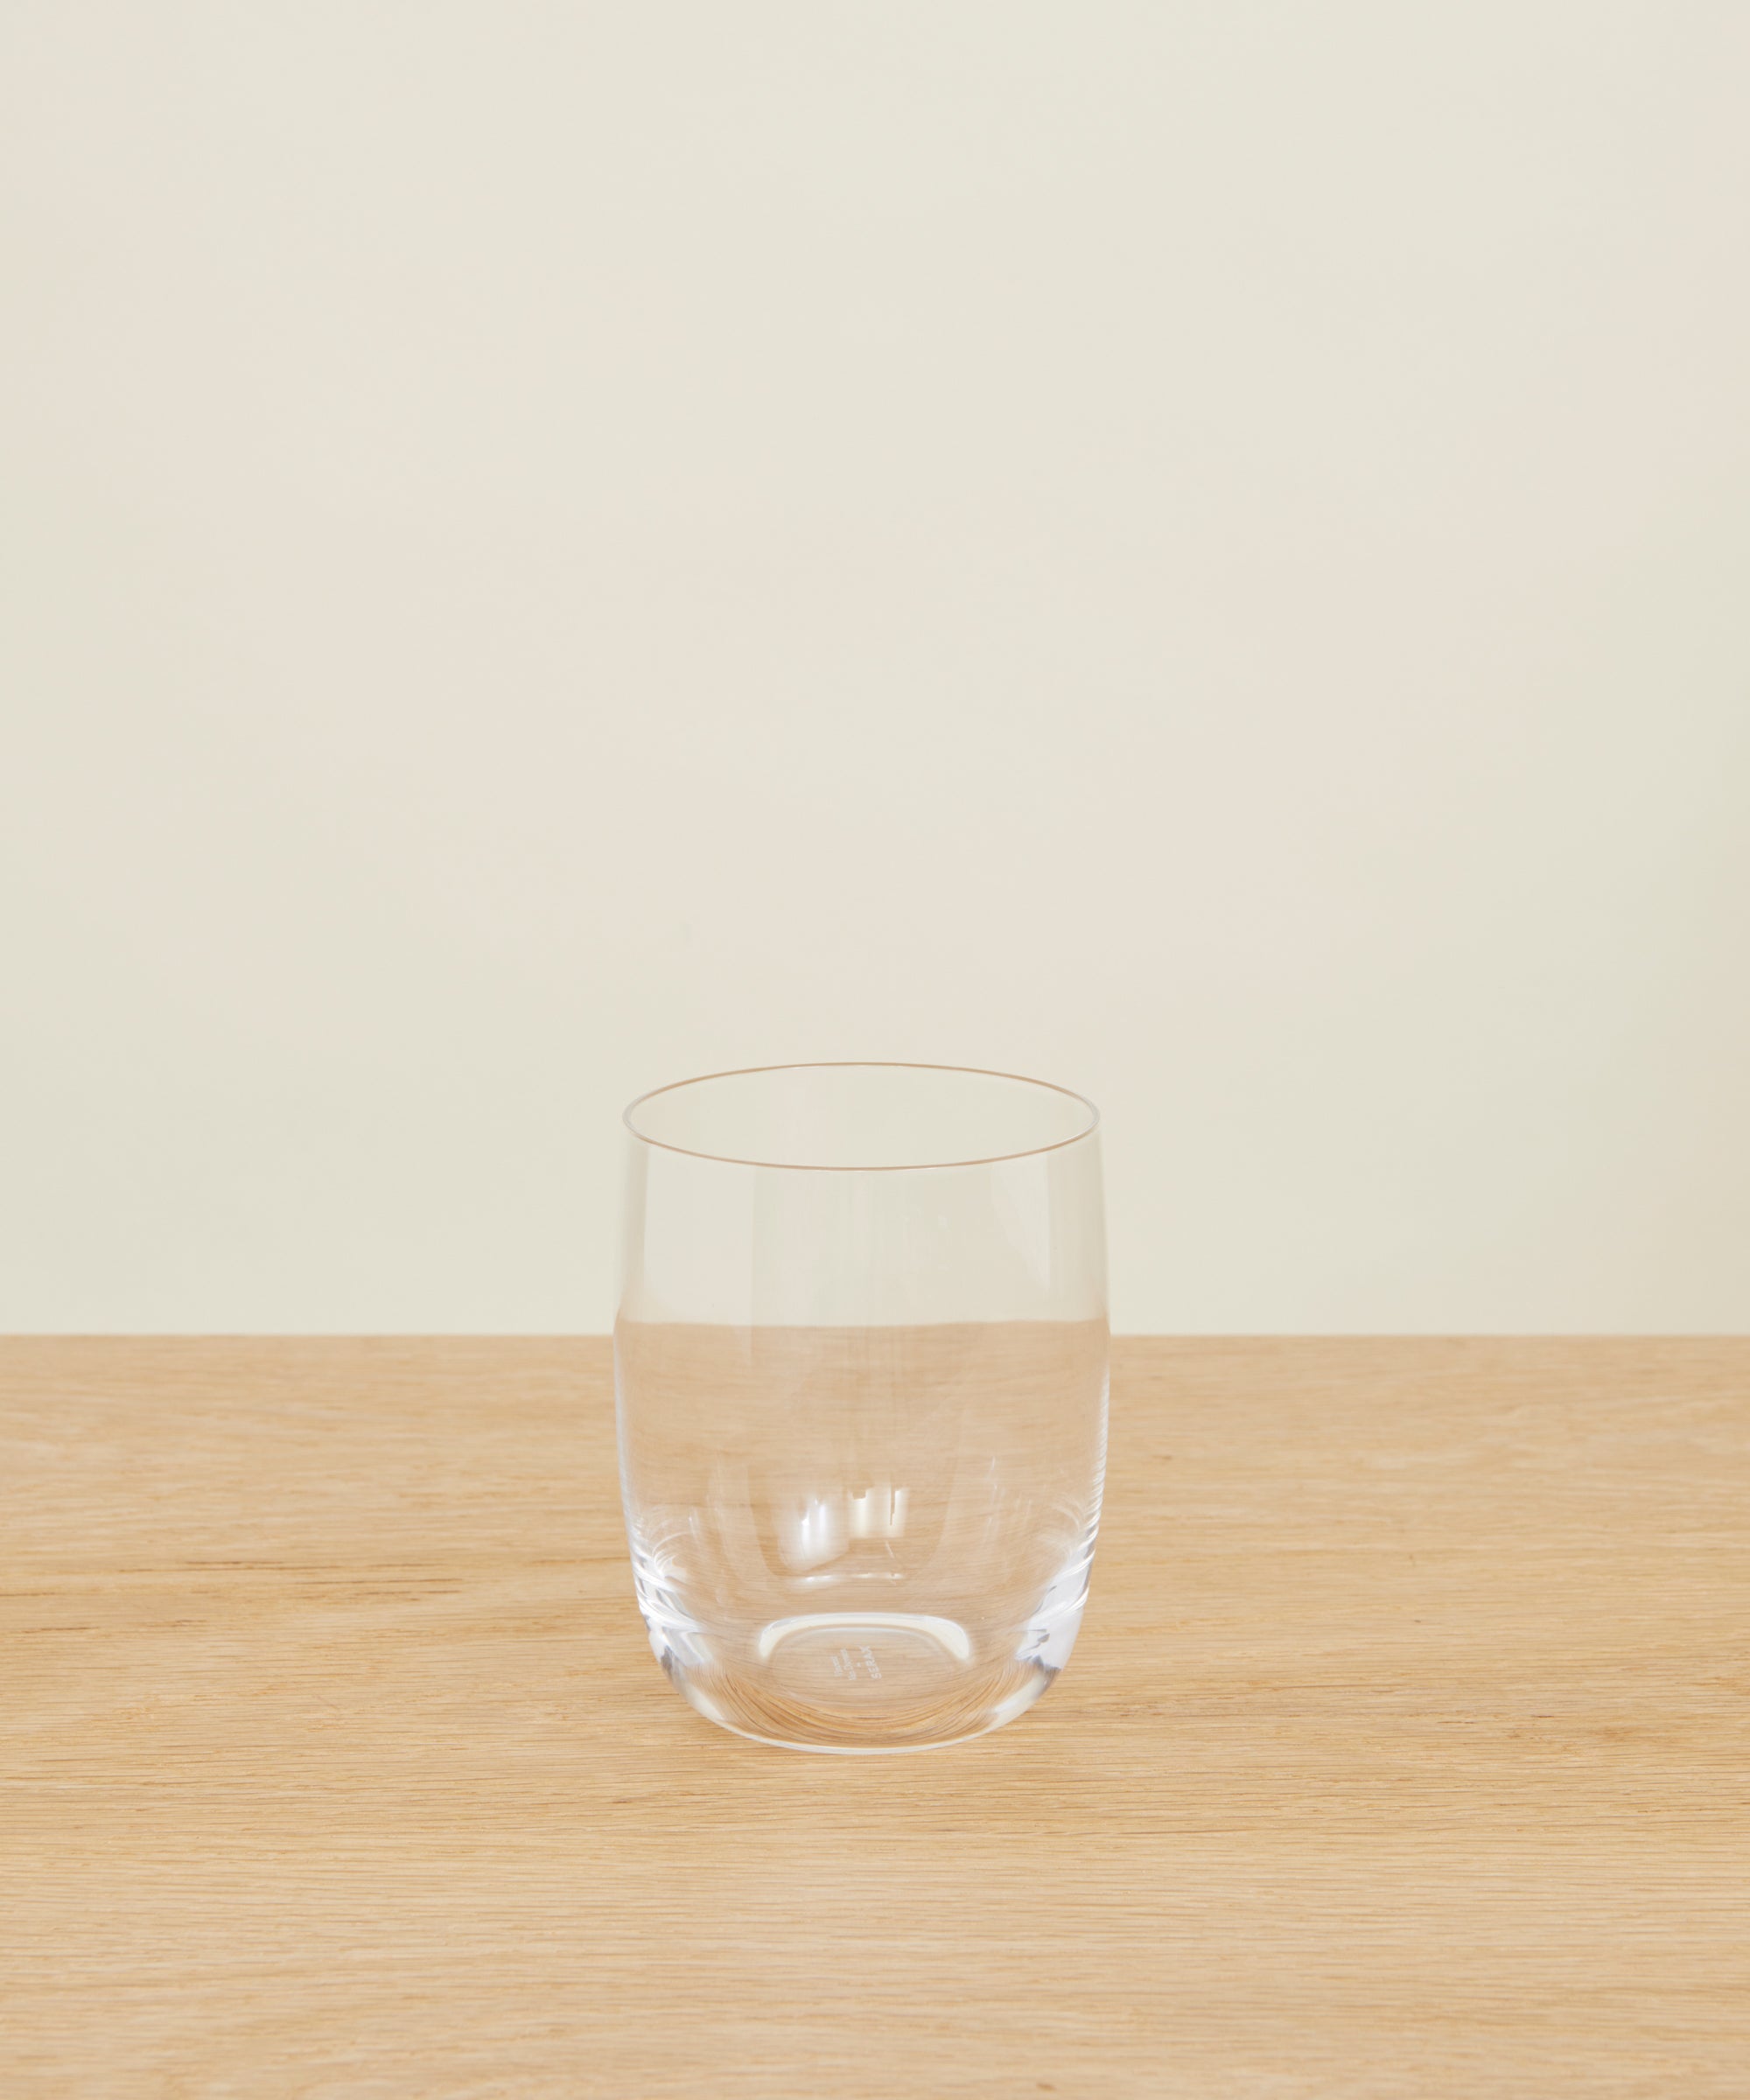 Serax x Vincent Van Duysen Universal High Glass Set of 4 Size 11.2oz